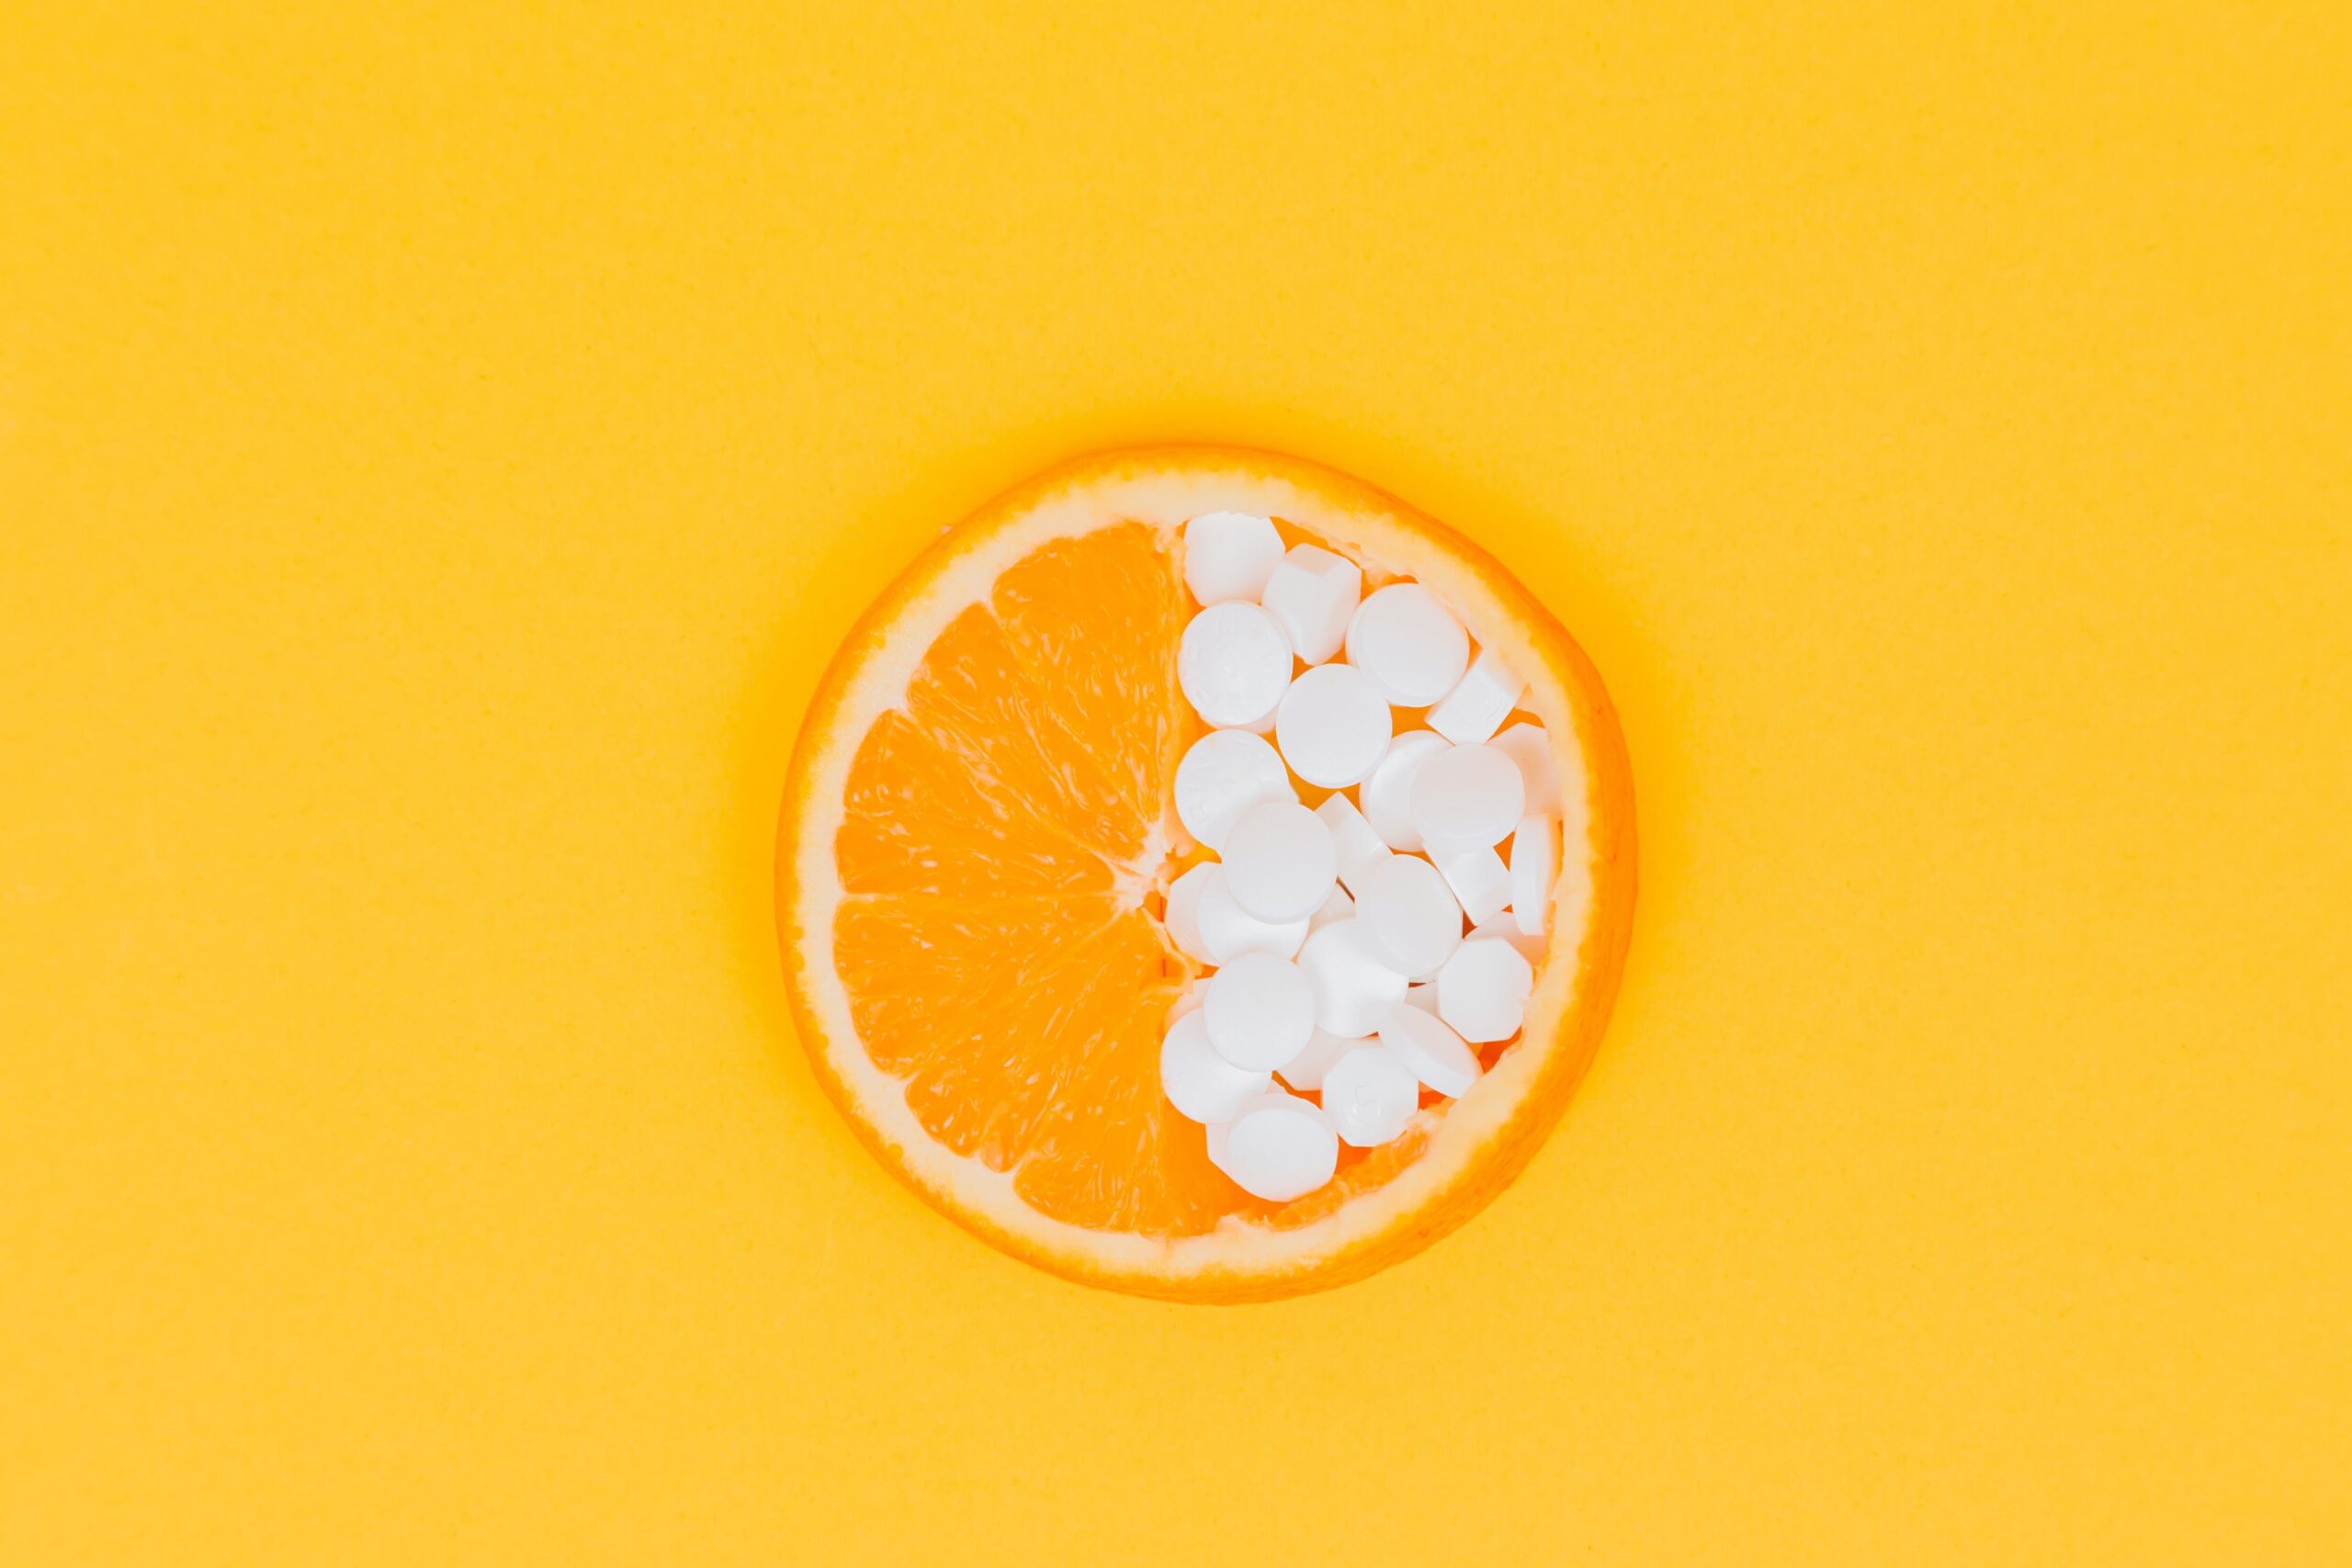 orange slice with folic acid supplements covering half